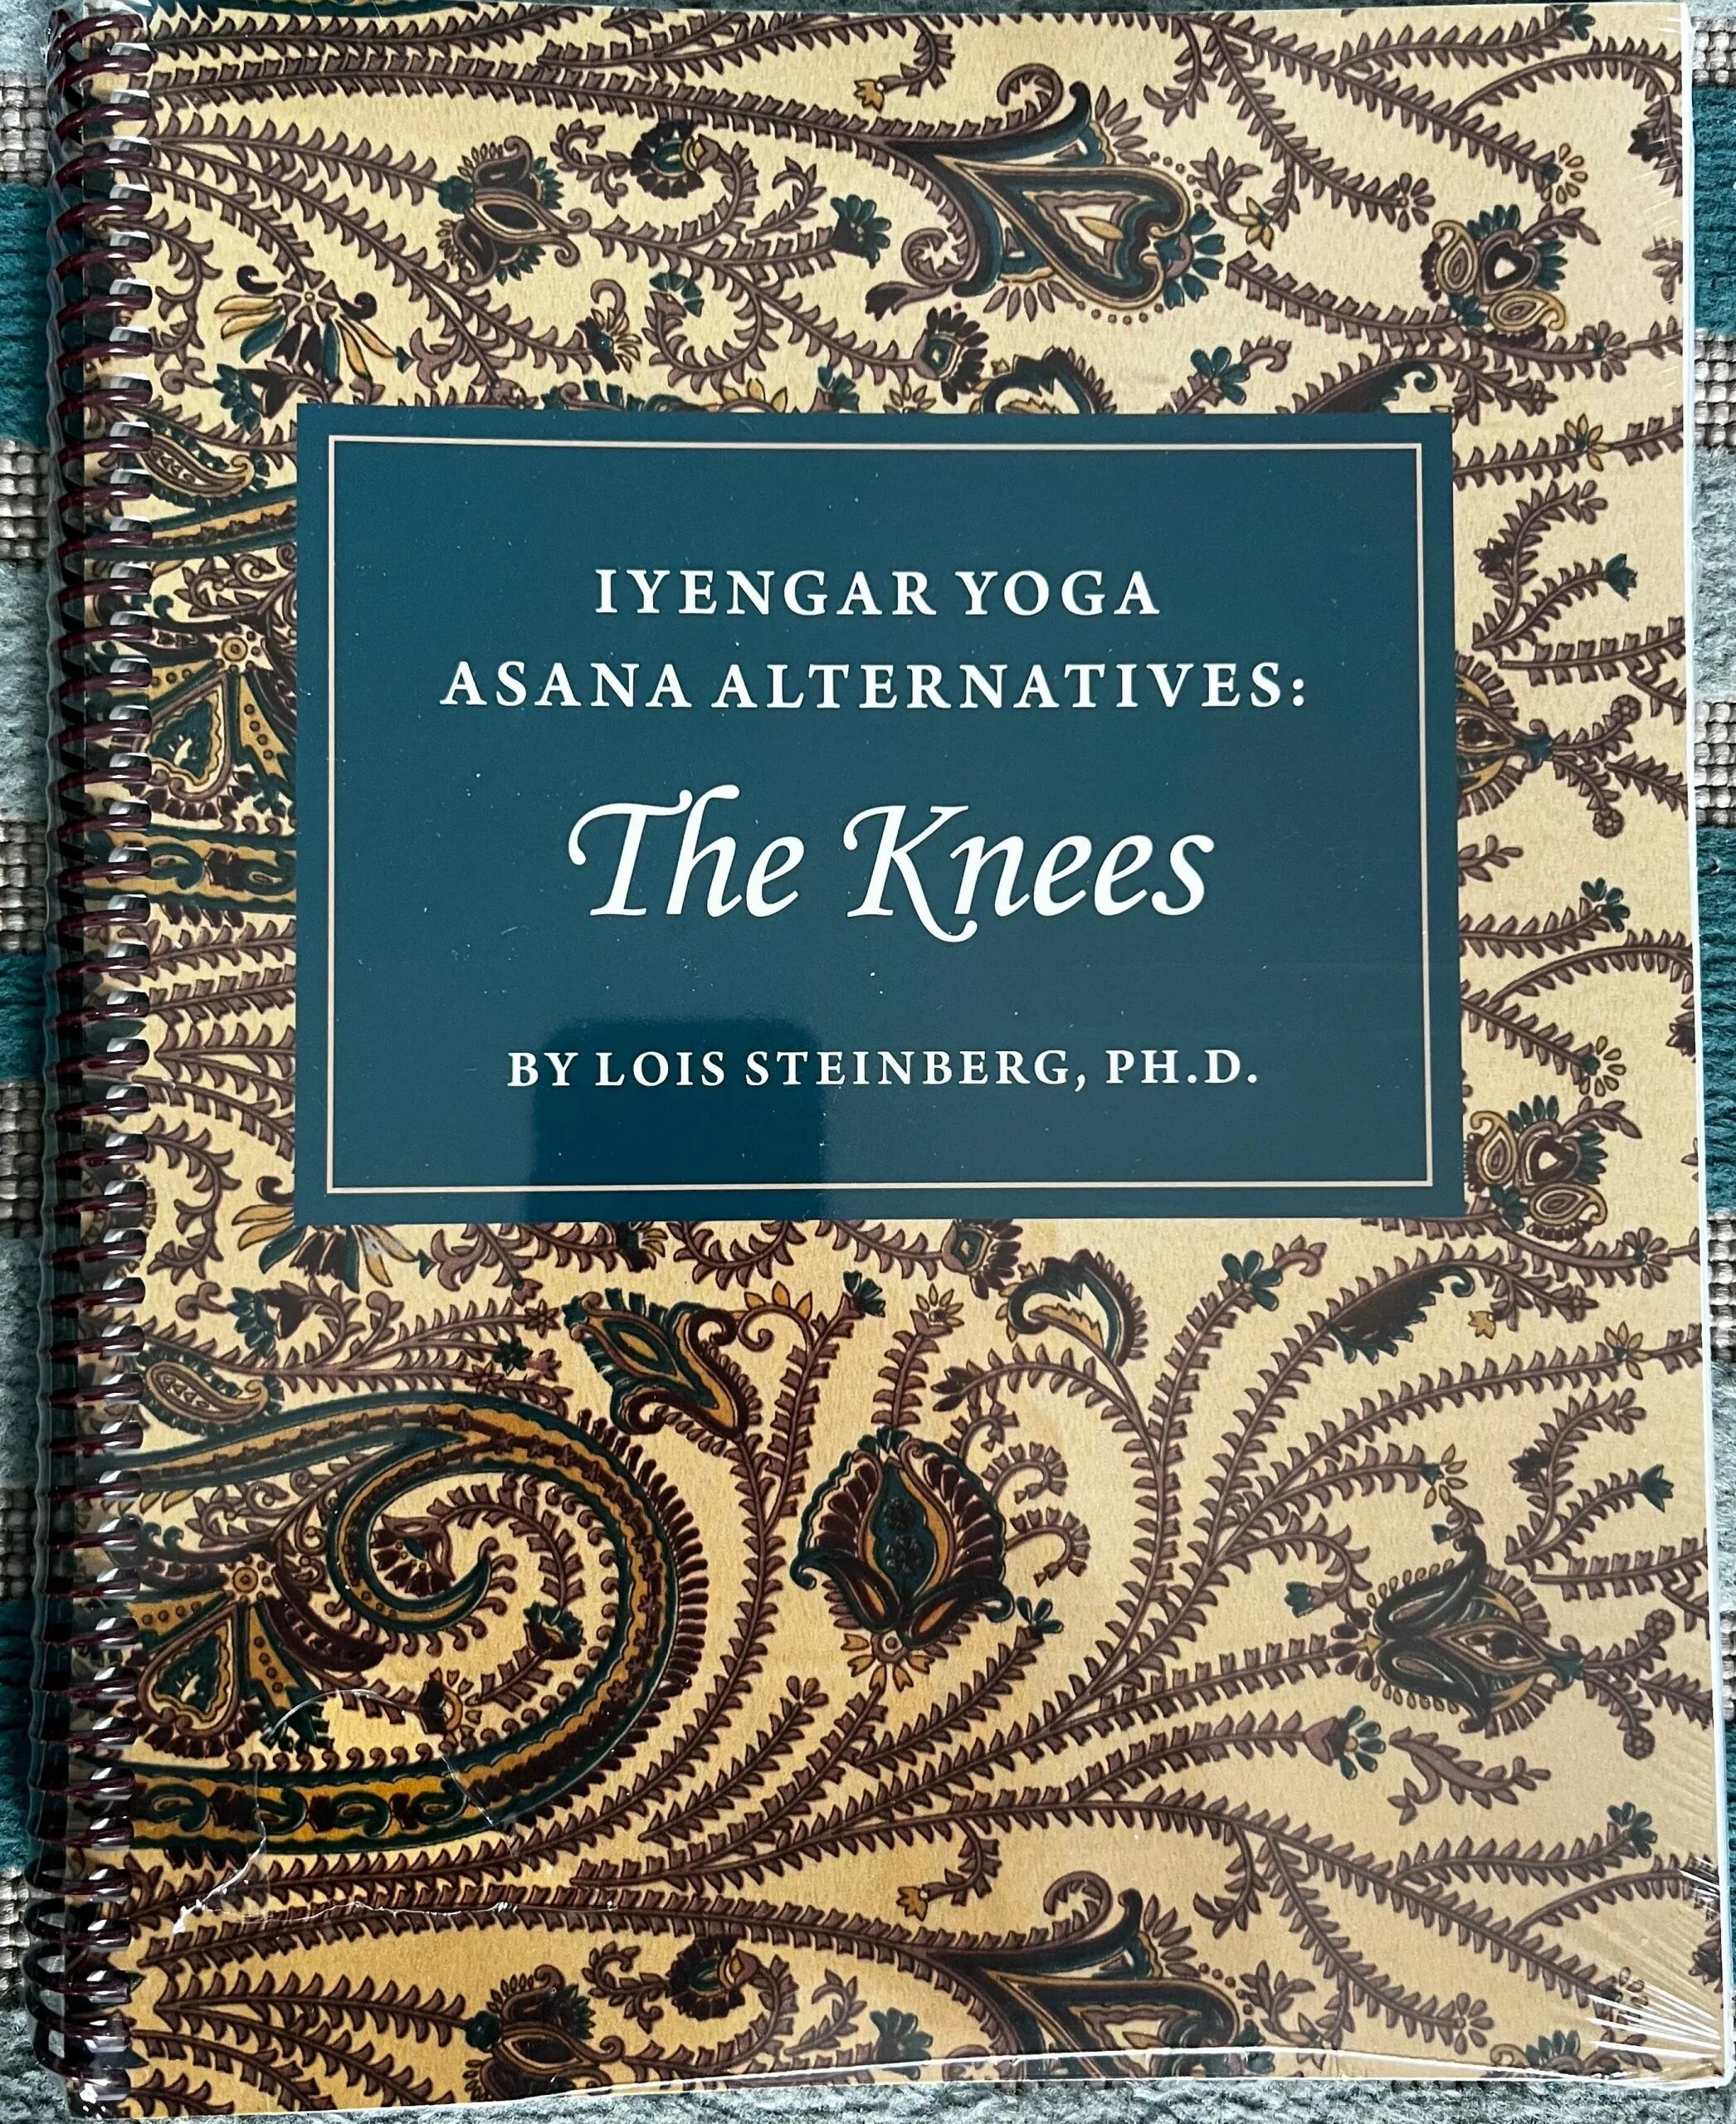 Йога айенгара книга. Лоис Штайнберг книги. Книги по йоге. Лоис Штайнберг практика йоги для женщин. Книги по йоге Айенгара.